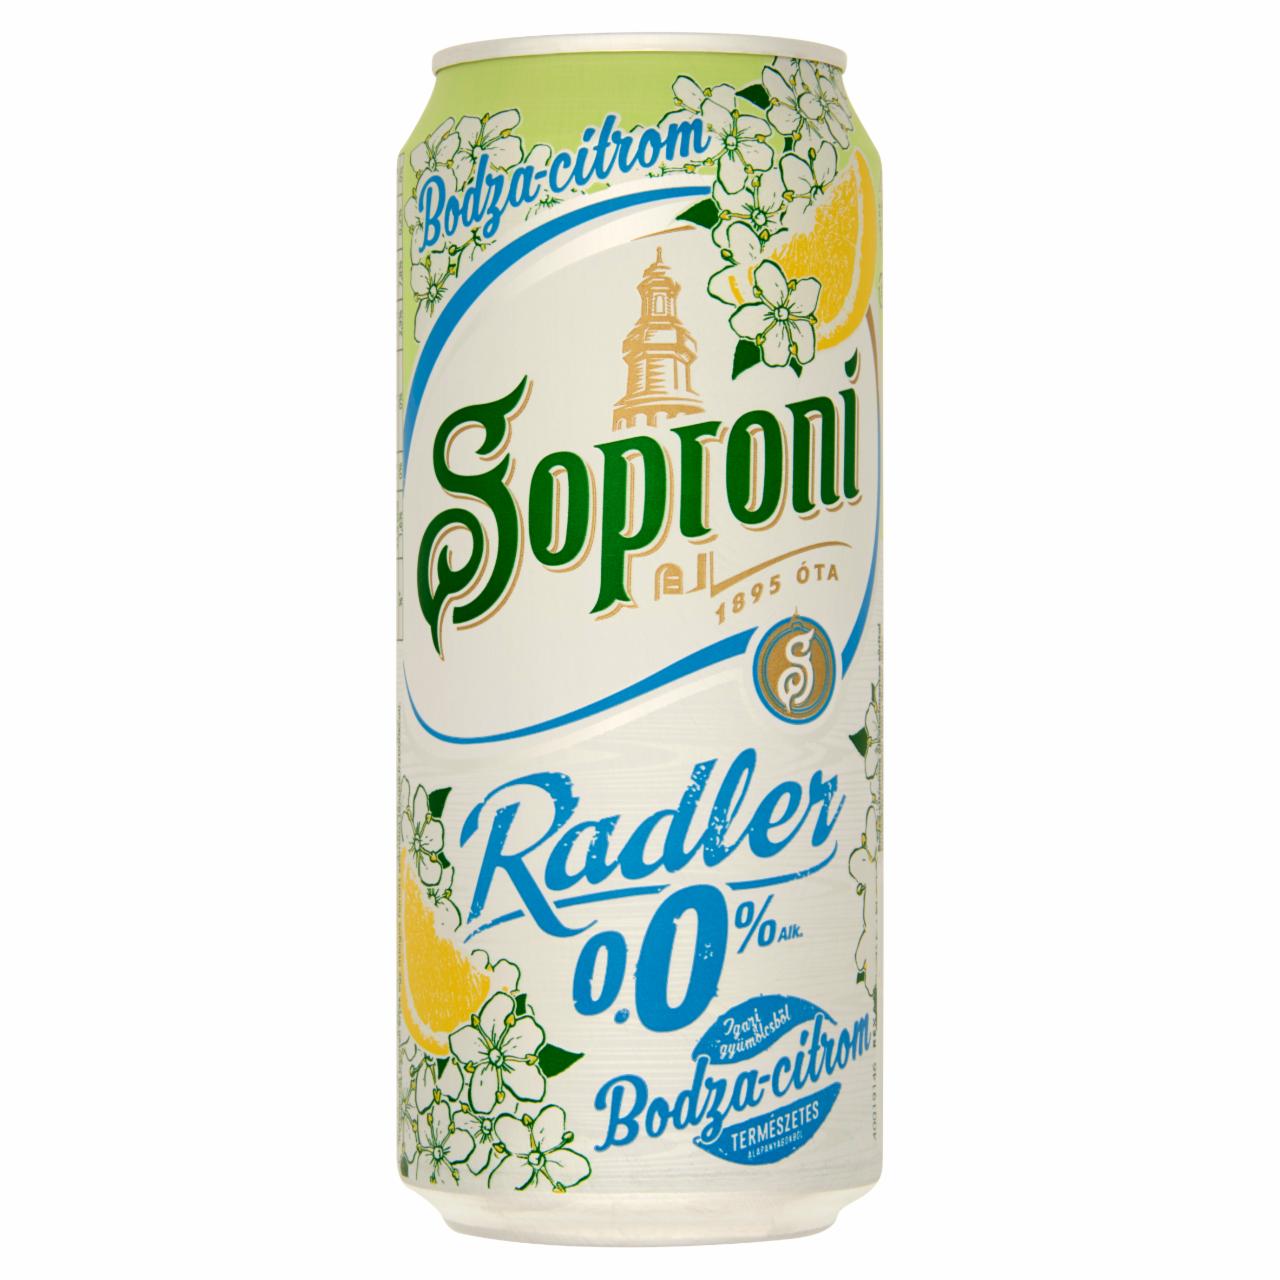 Képek - Soproni Radler bodza-citromos alkoholmentes sörital 0,4 l